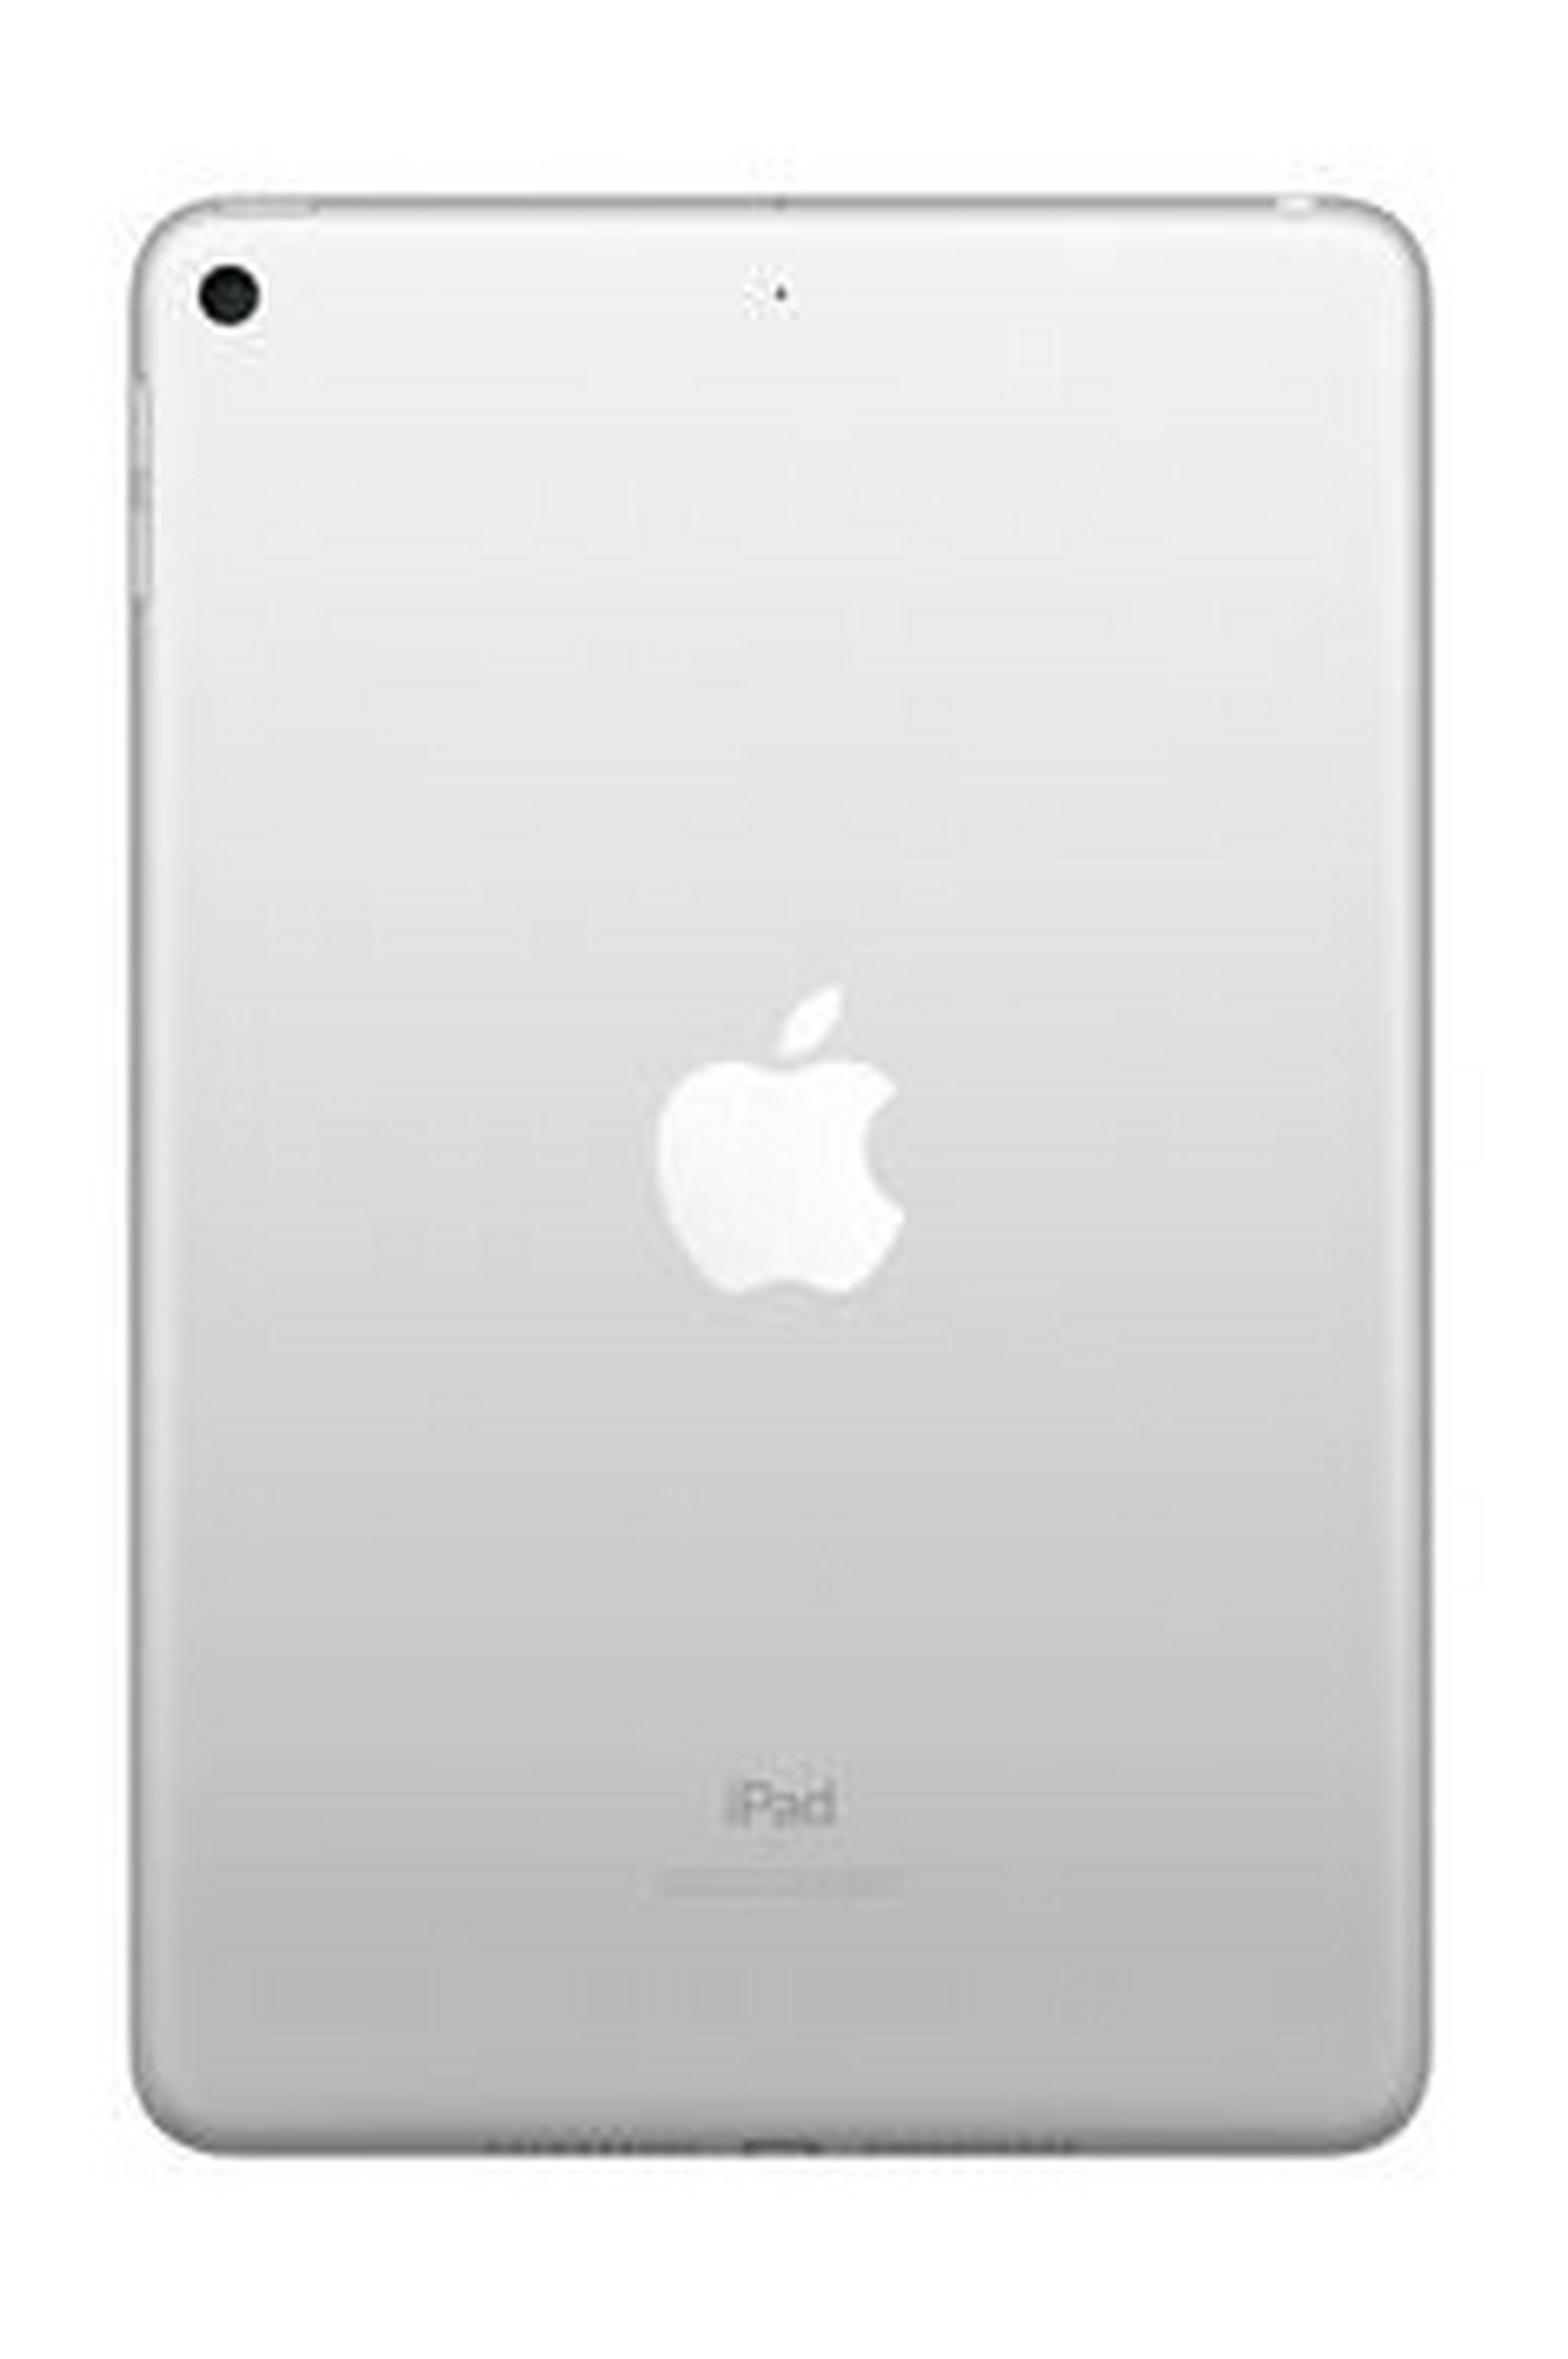 APPLE iPad Mini 5 7.9-inch 64GB 4G LTE Tablet - Silver